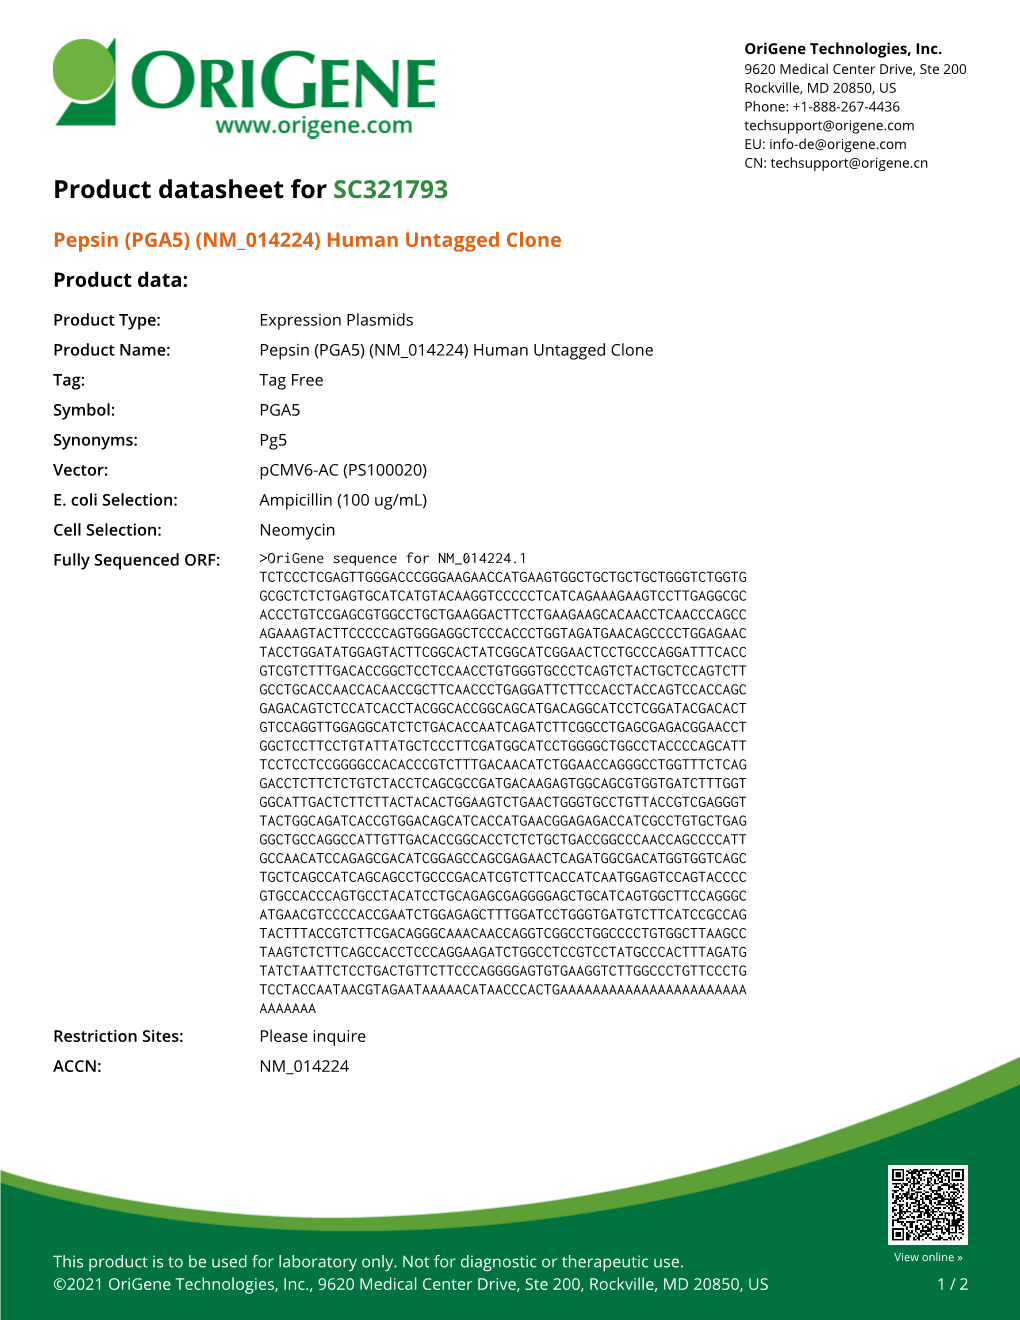 Pepsin (PGA5) (NM 014224) Human Untagged Clone Product Data